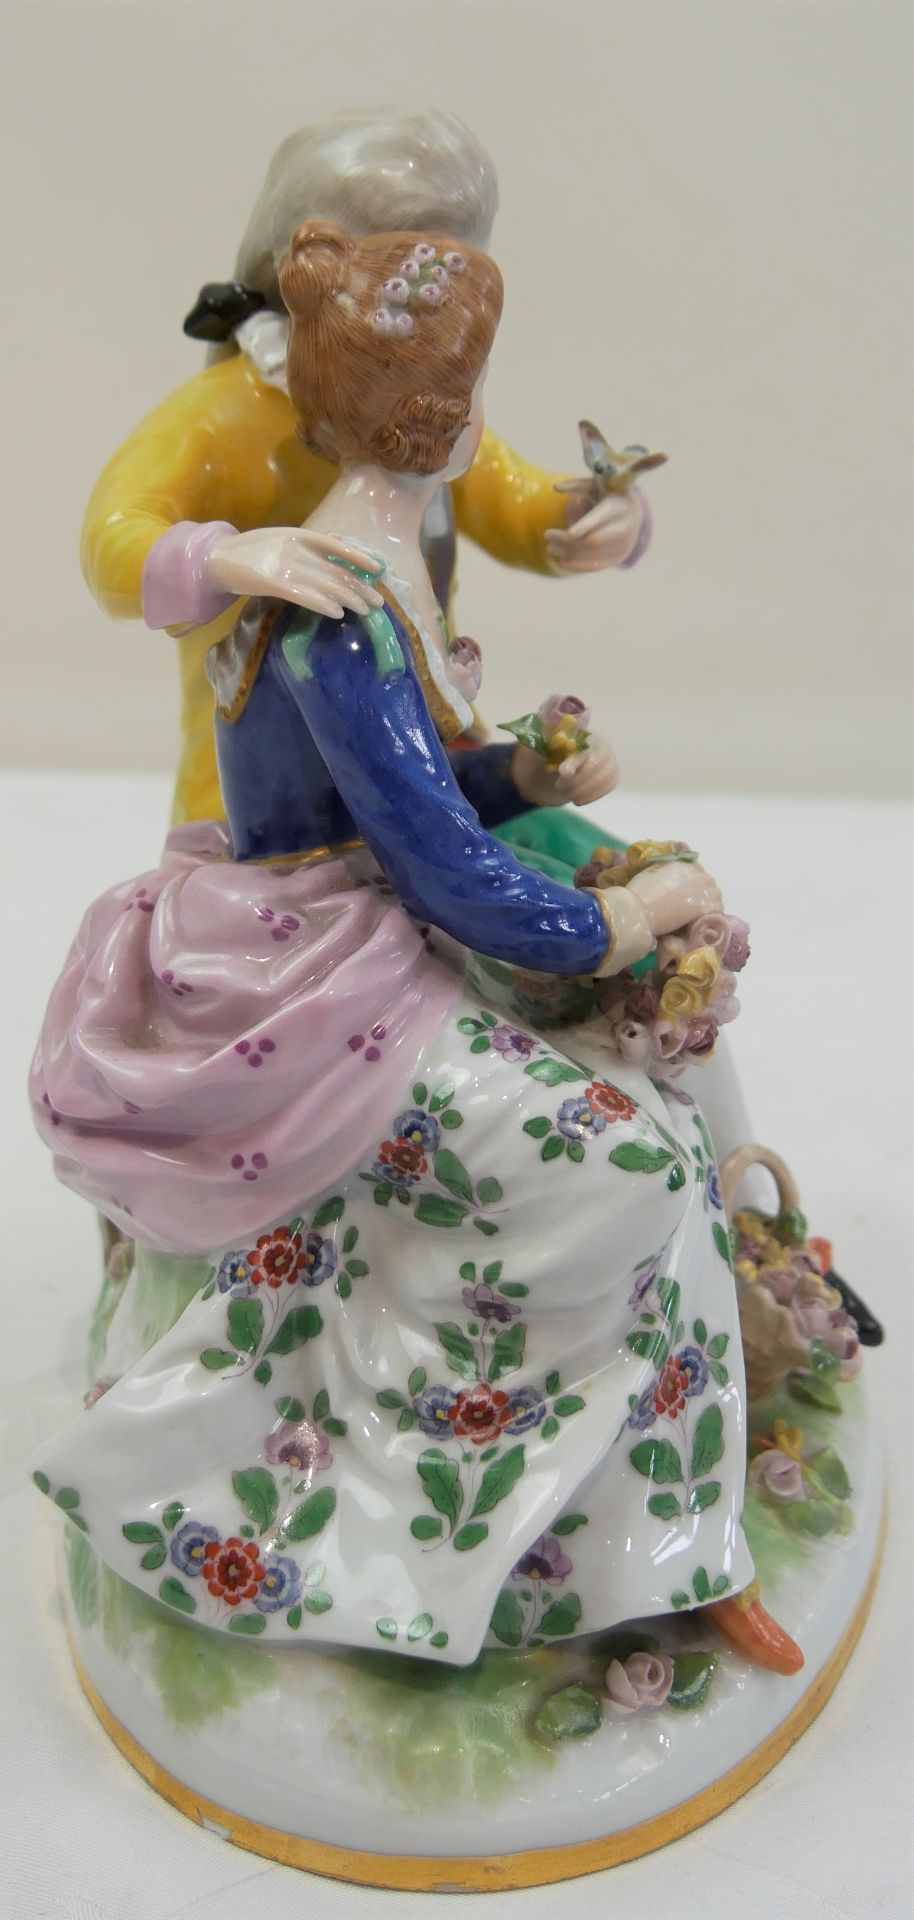 BPM Porzellanfigur "Charmante Szene", üppige, fein bemalte Figur. Höhe ca. 23 cm, Breite ca. 21 cm - Bild 2 aus 4